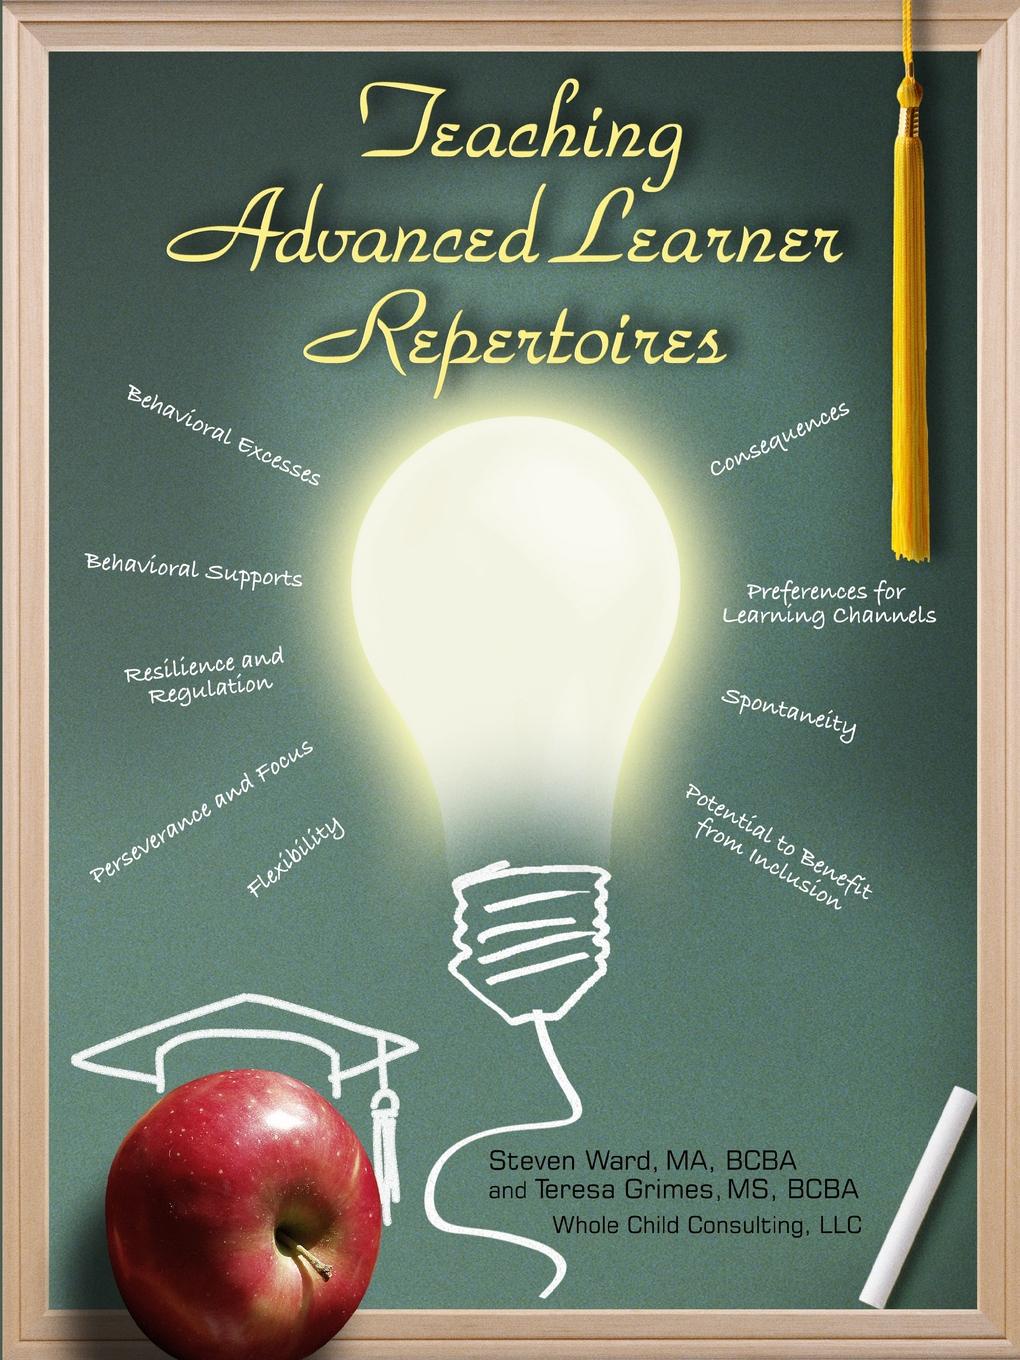 Teaching Advanced Learner Repertoires